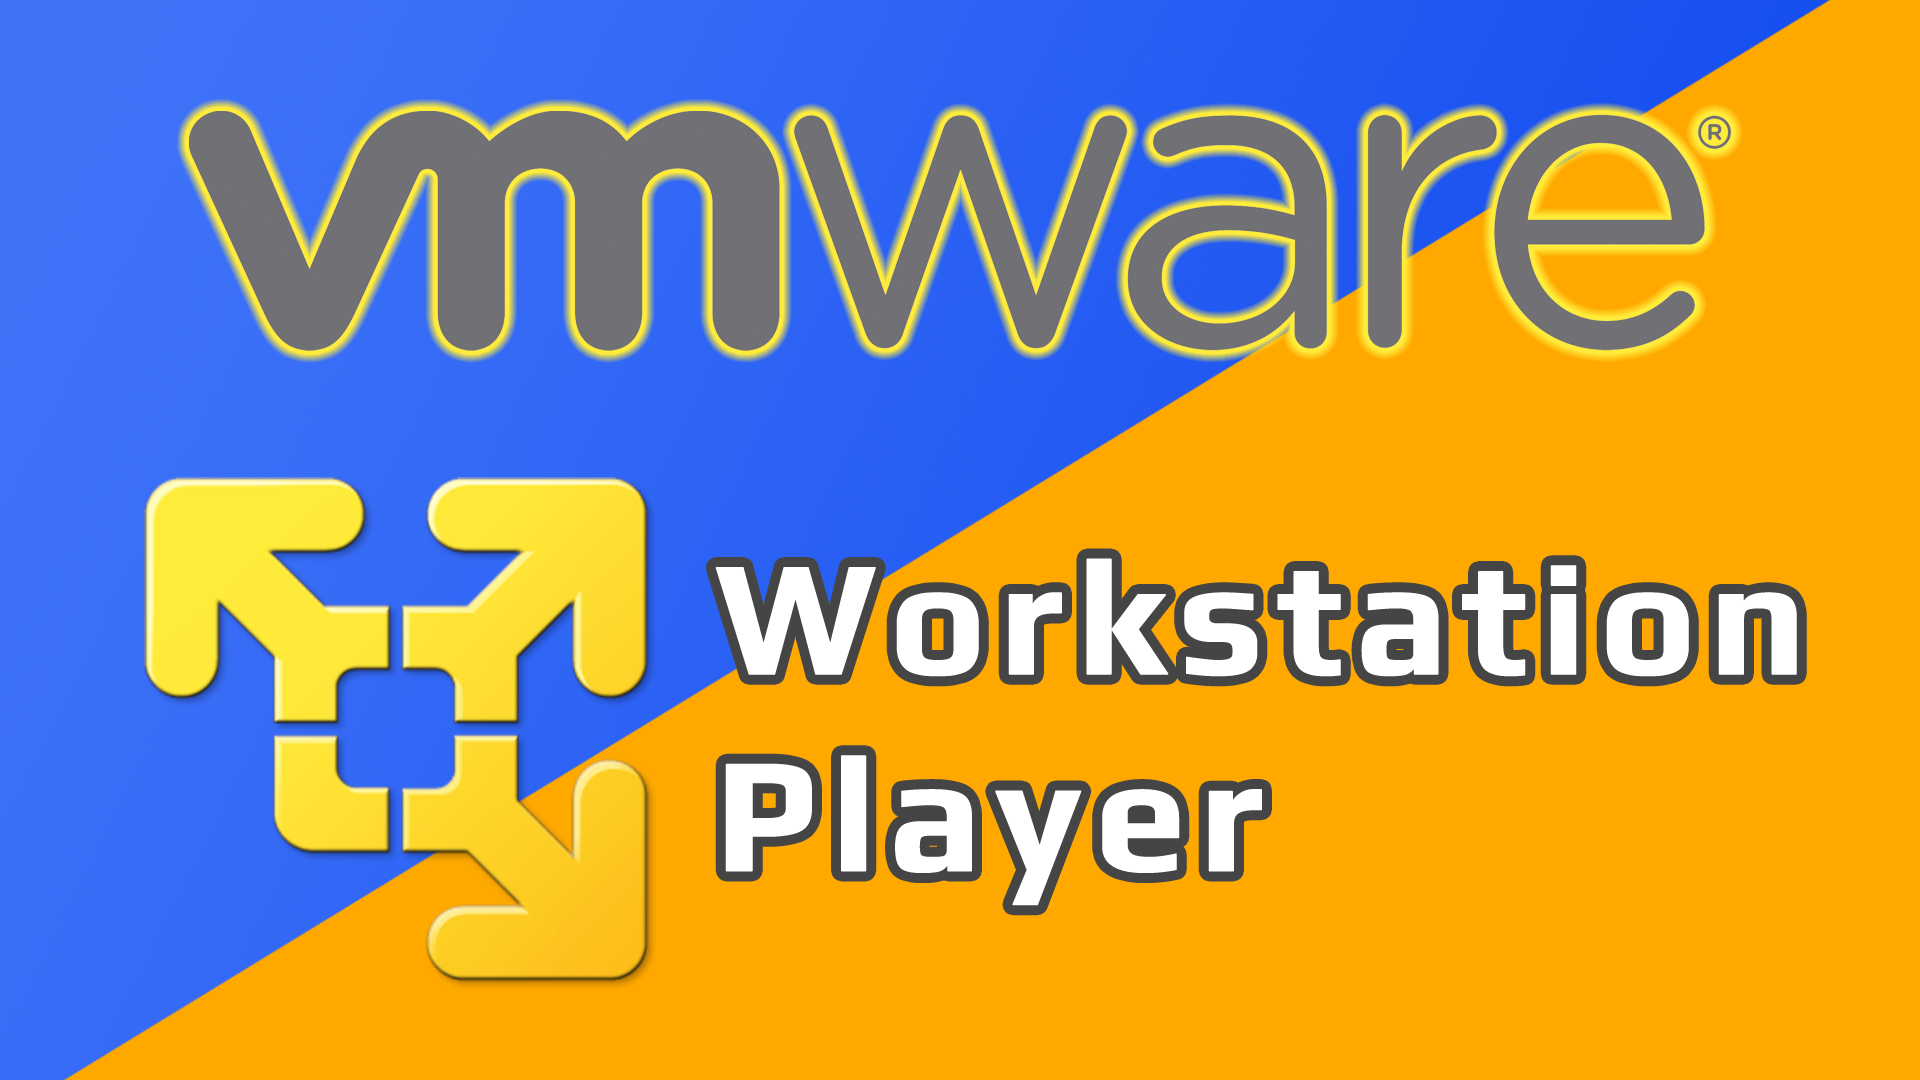 download vmware workstation 12 player free